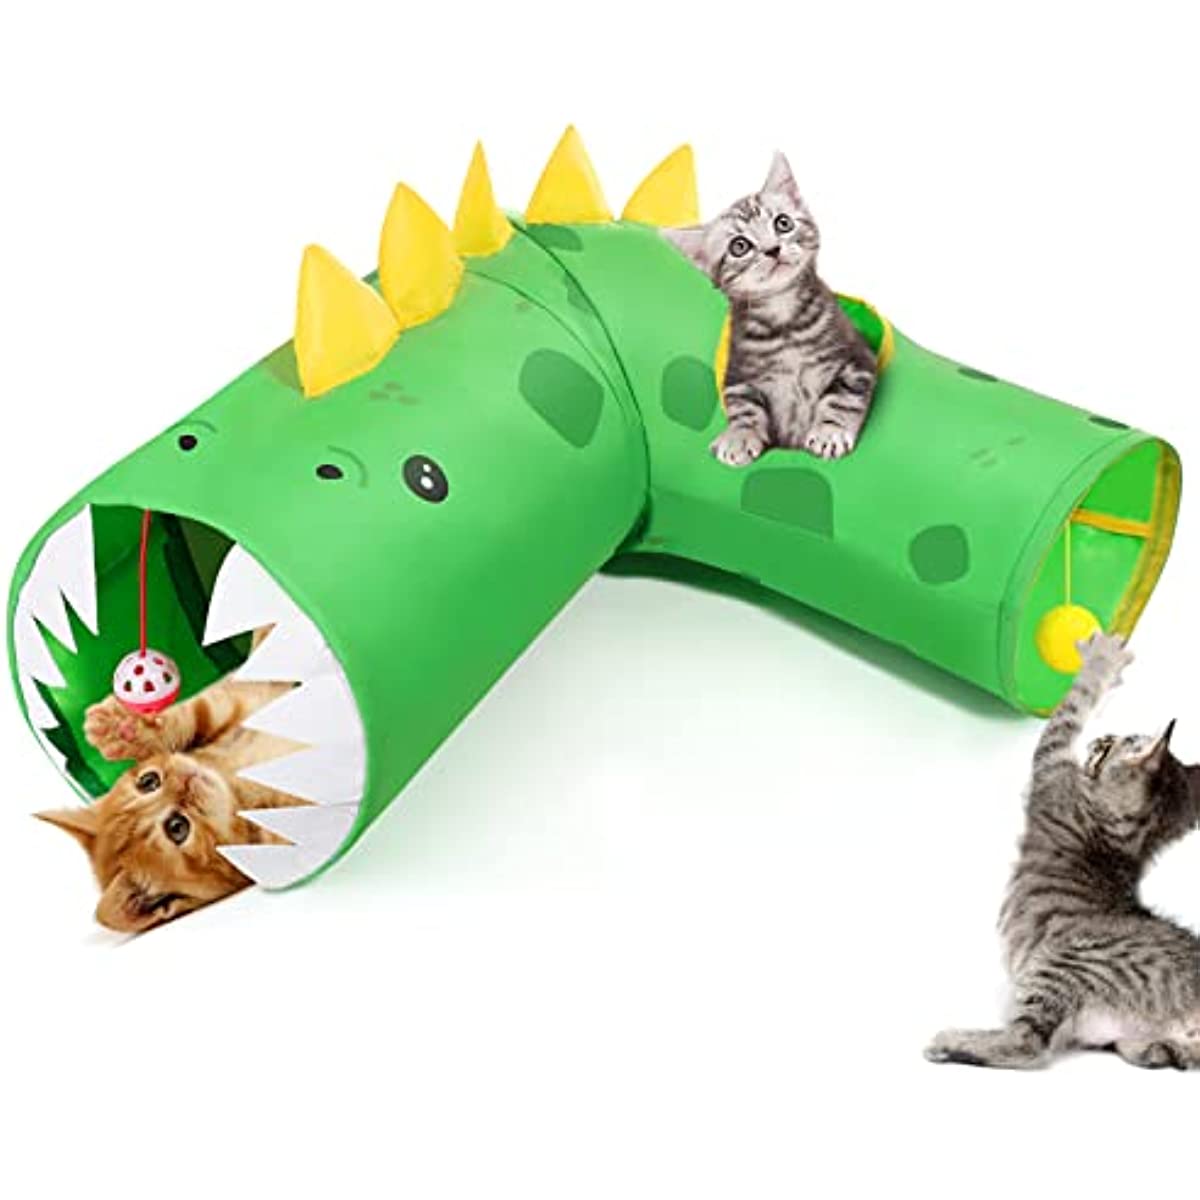 Dinosaur Shaped Cat Tunnel for Indoor Cat